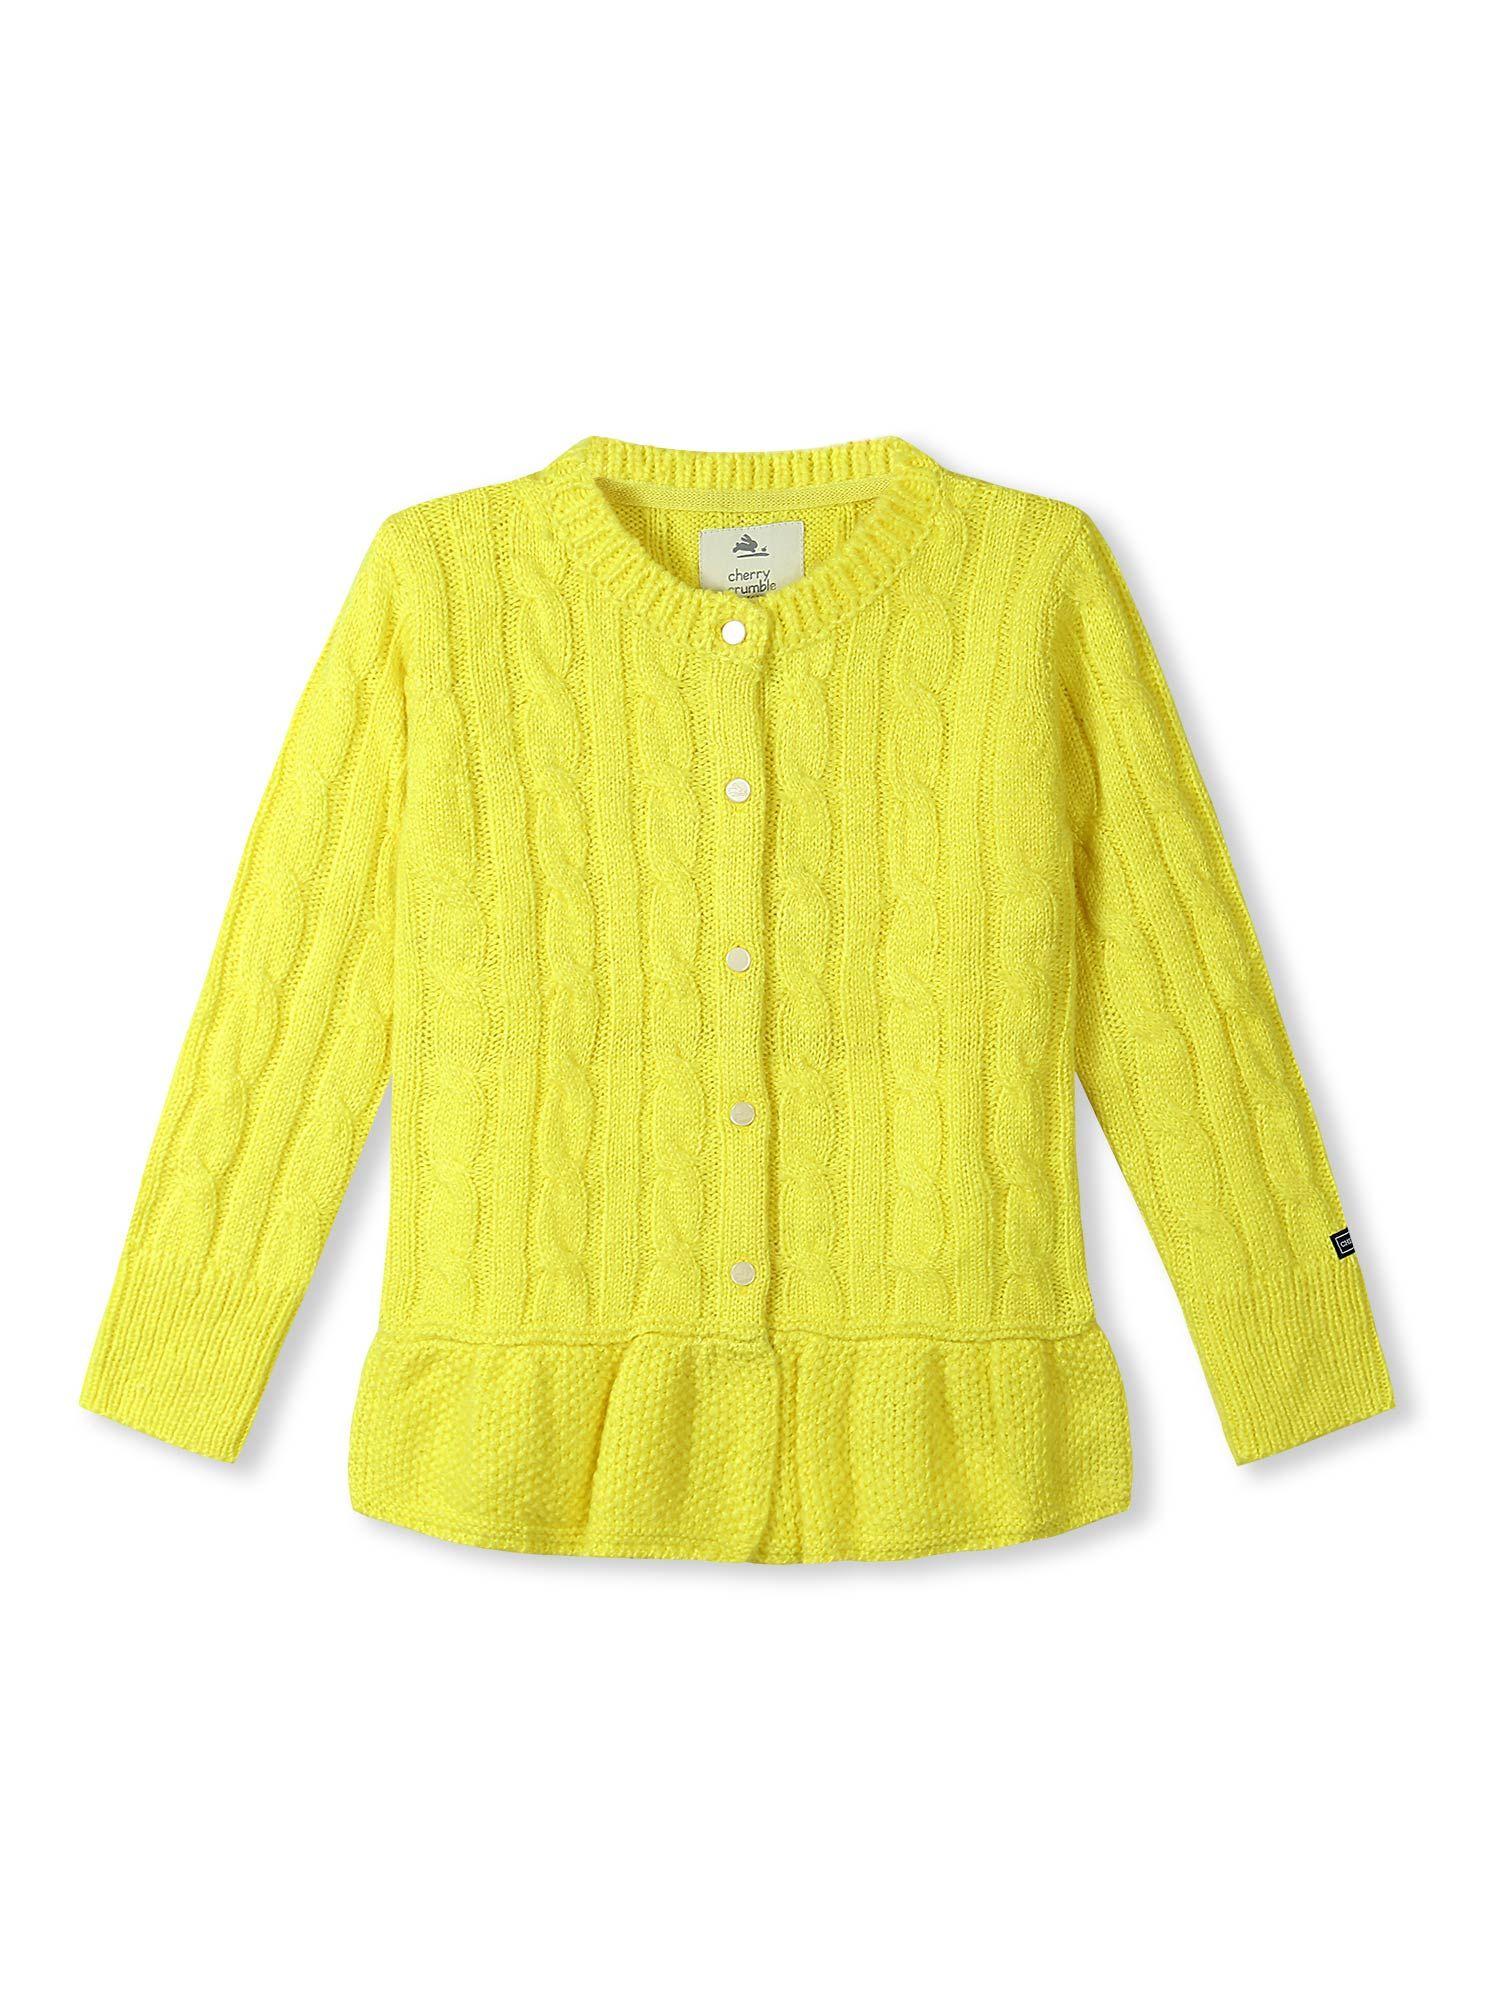 girls-yellow-soft-cable-knit-peplum-cardigan-sweater